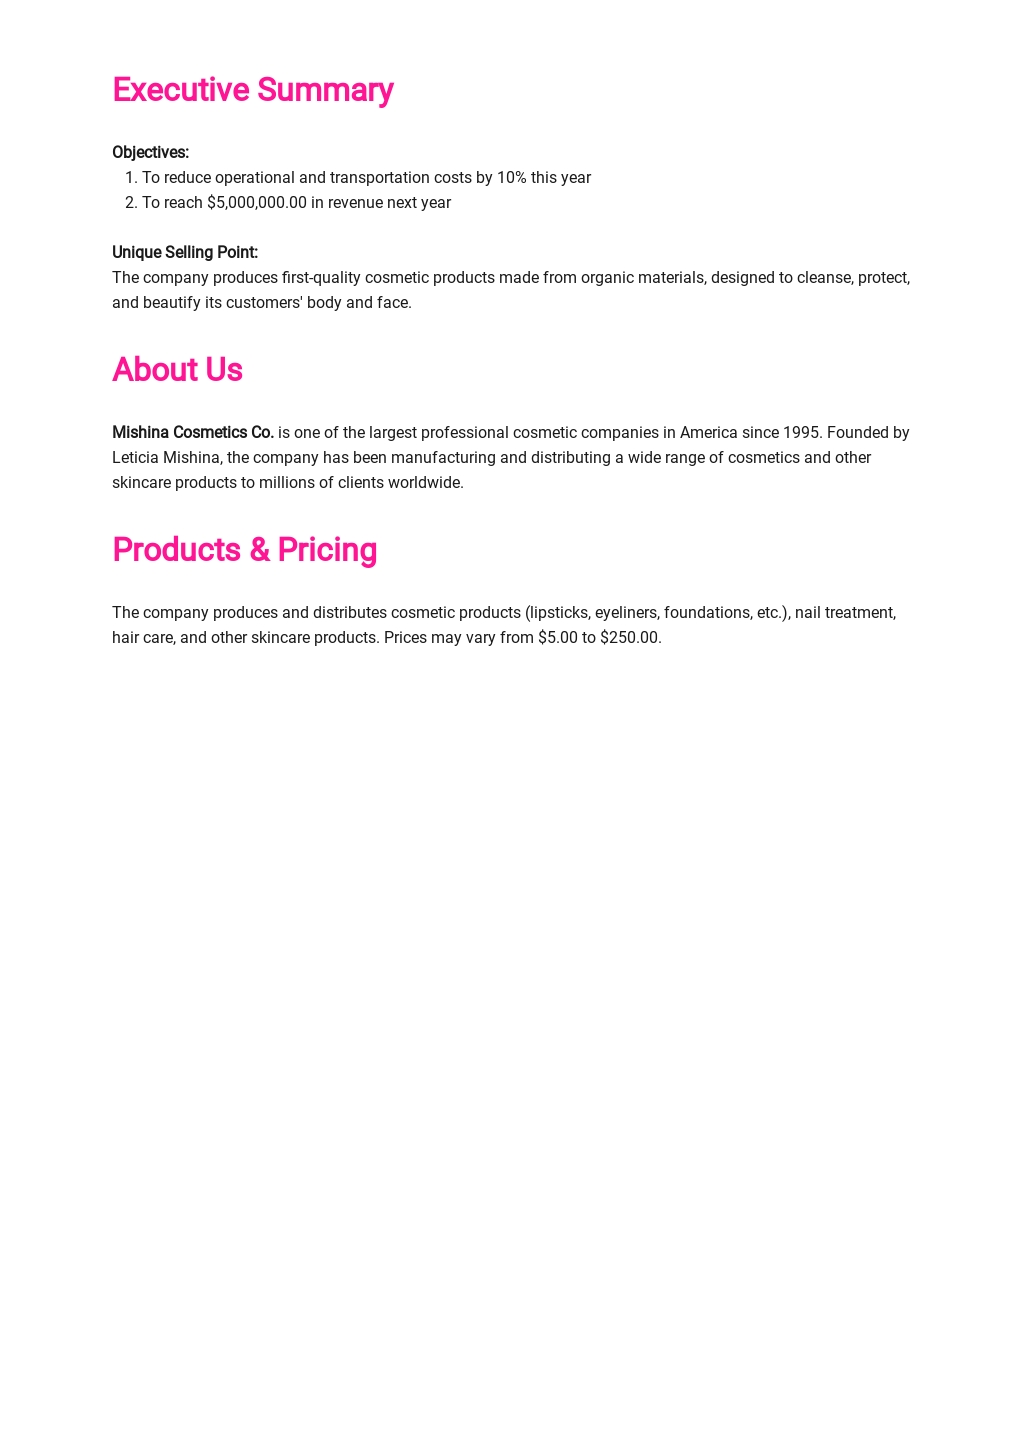 cosmetic line business plan pdf